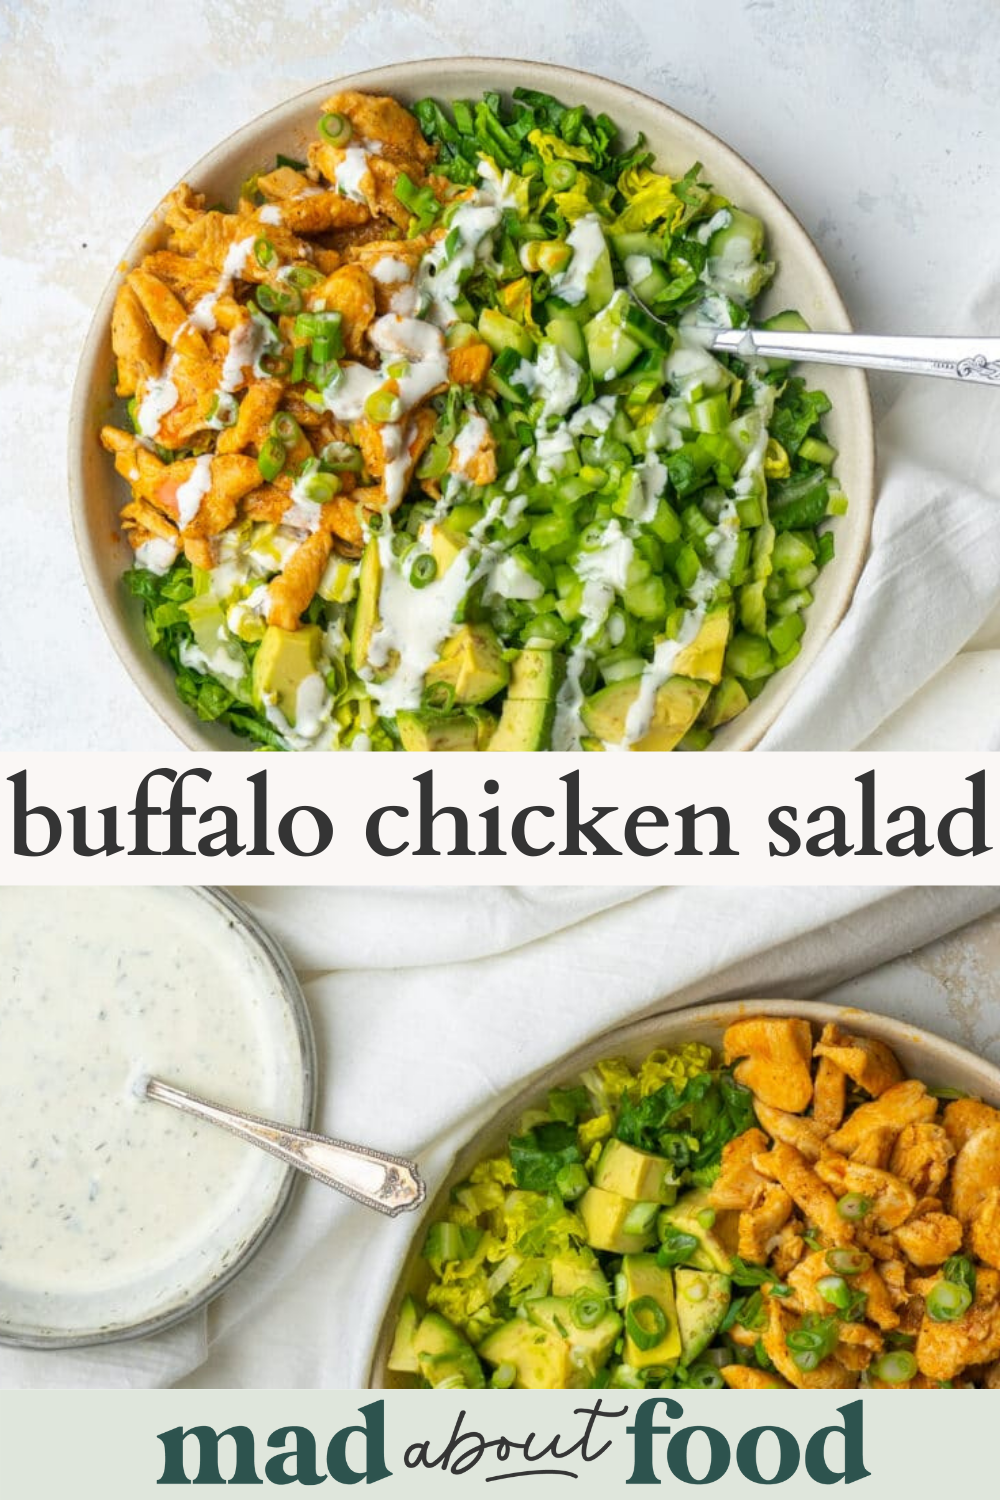 Image for pinning buffalo chicken salad recipe on Pinterest